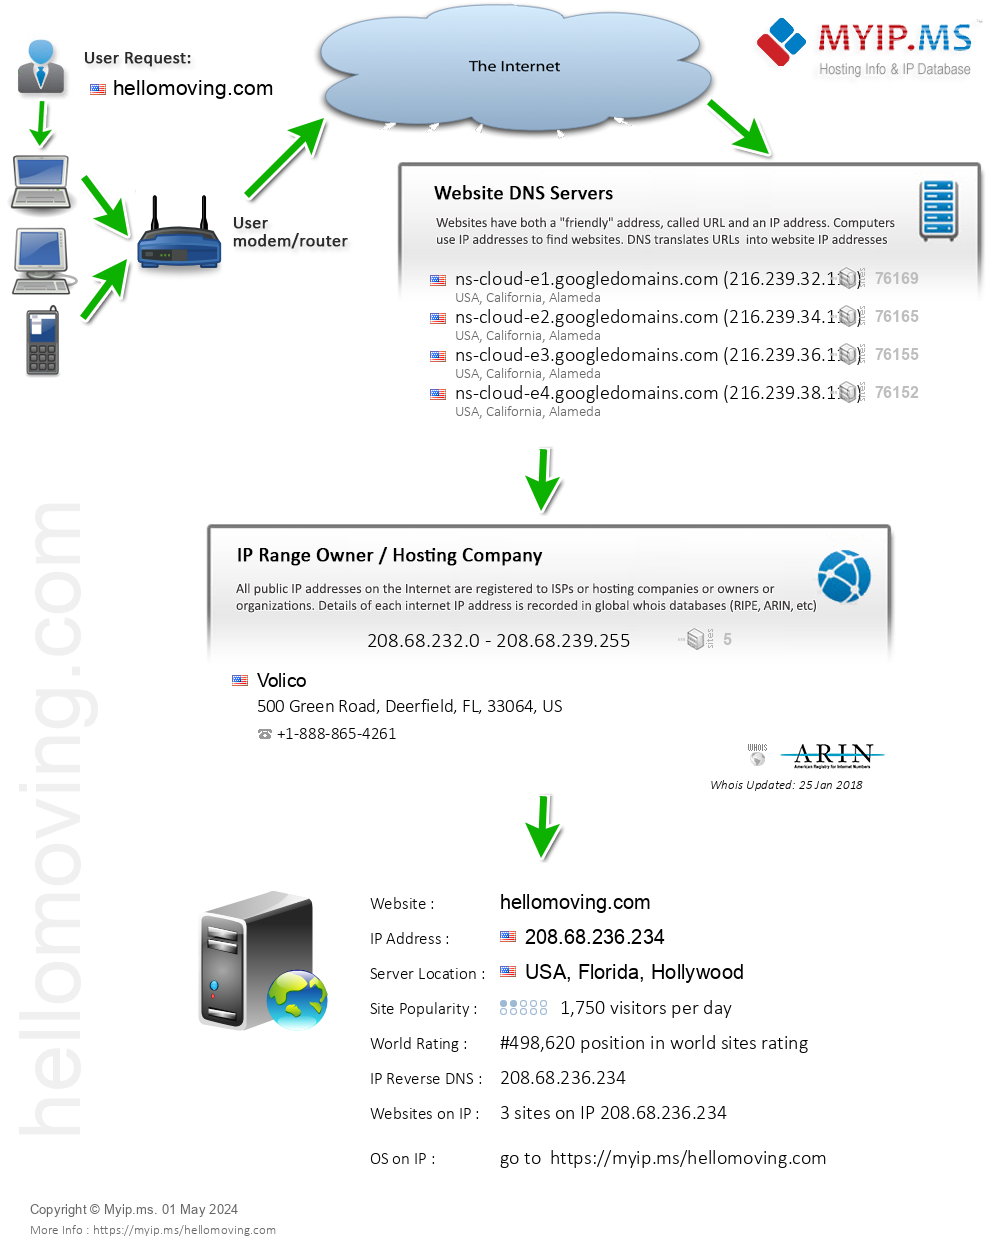 Hellomoving.com - Website Hosting Visual IP Diagram